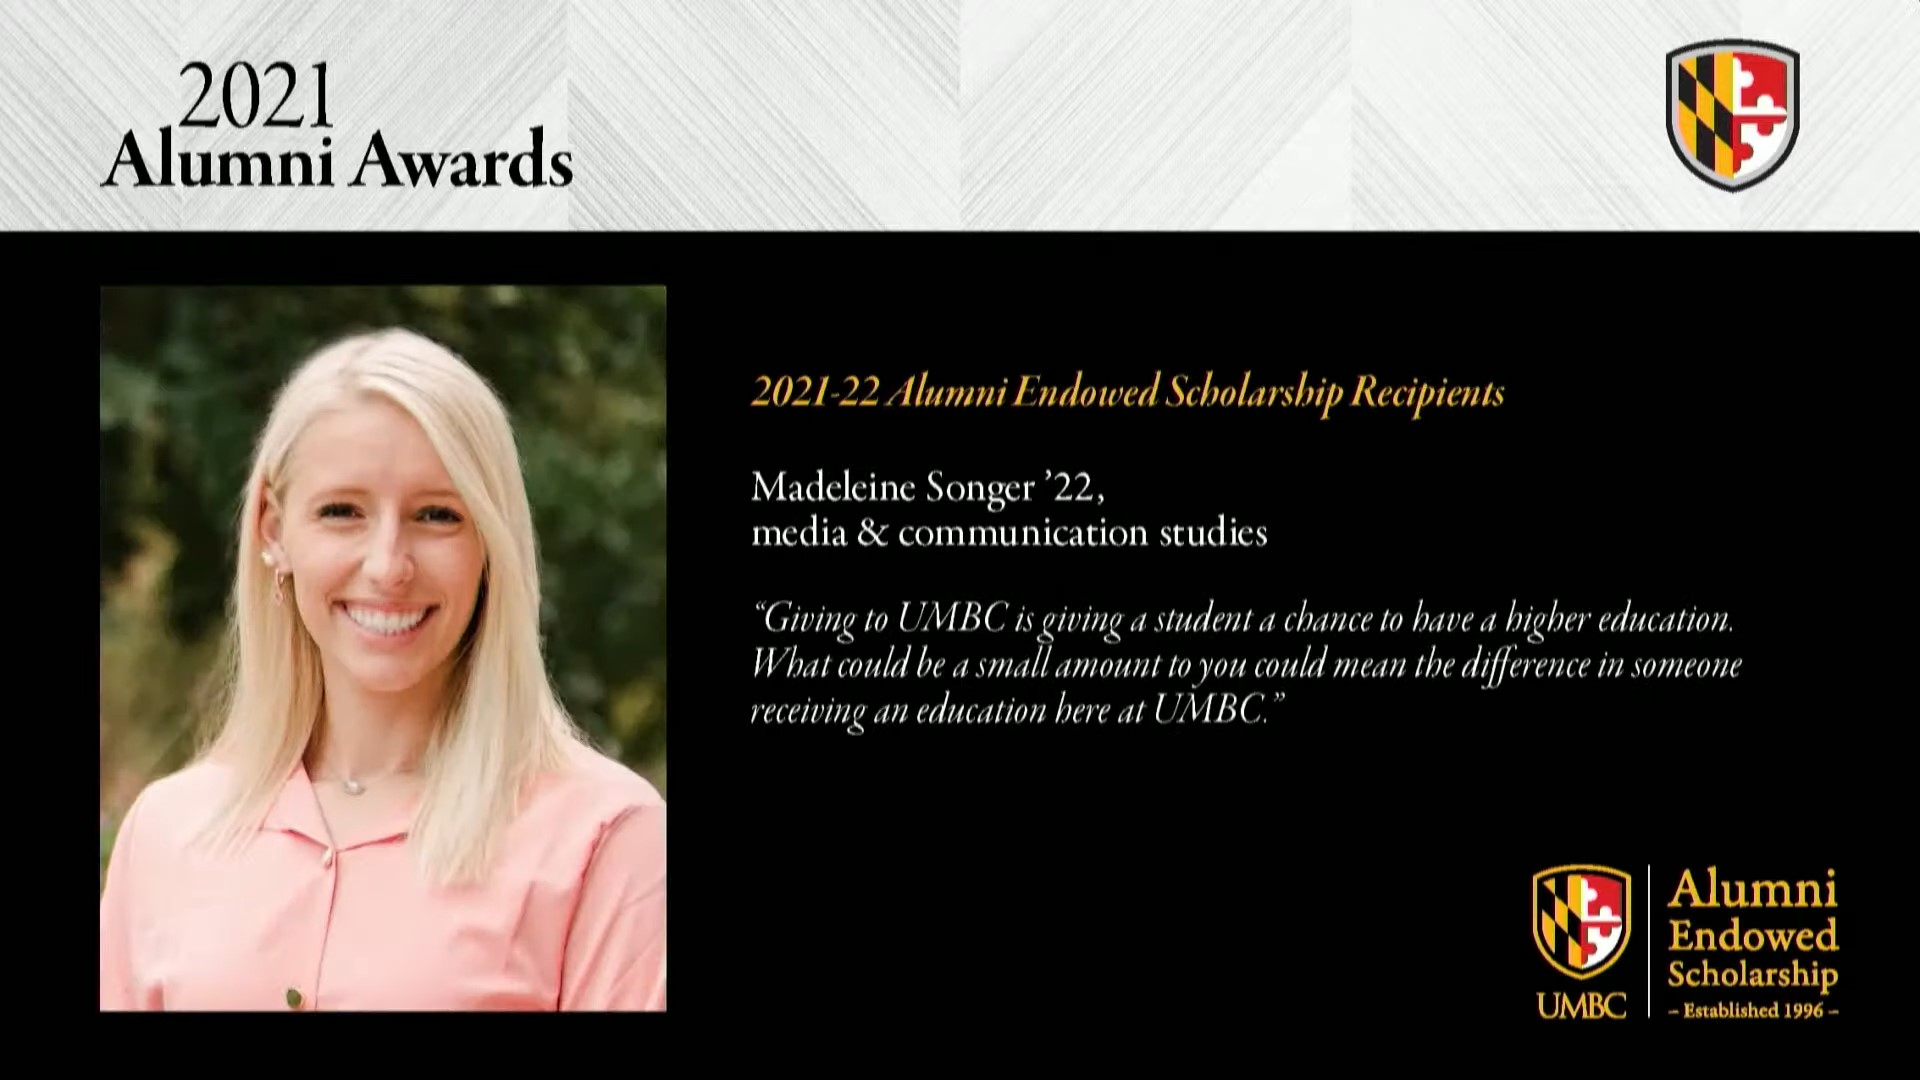 Congratulations to Madeleine Songer!